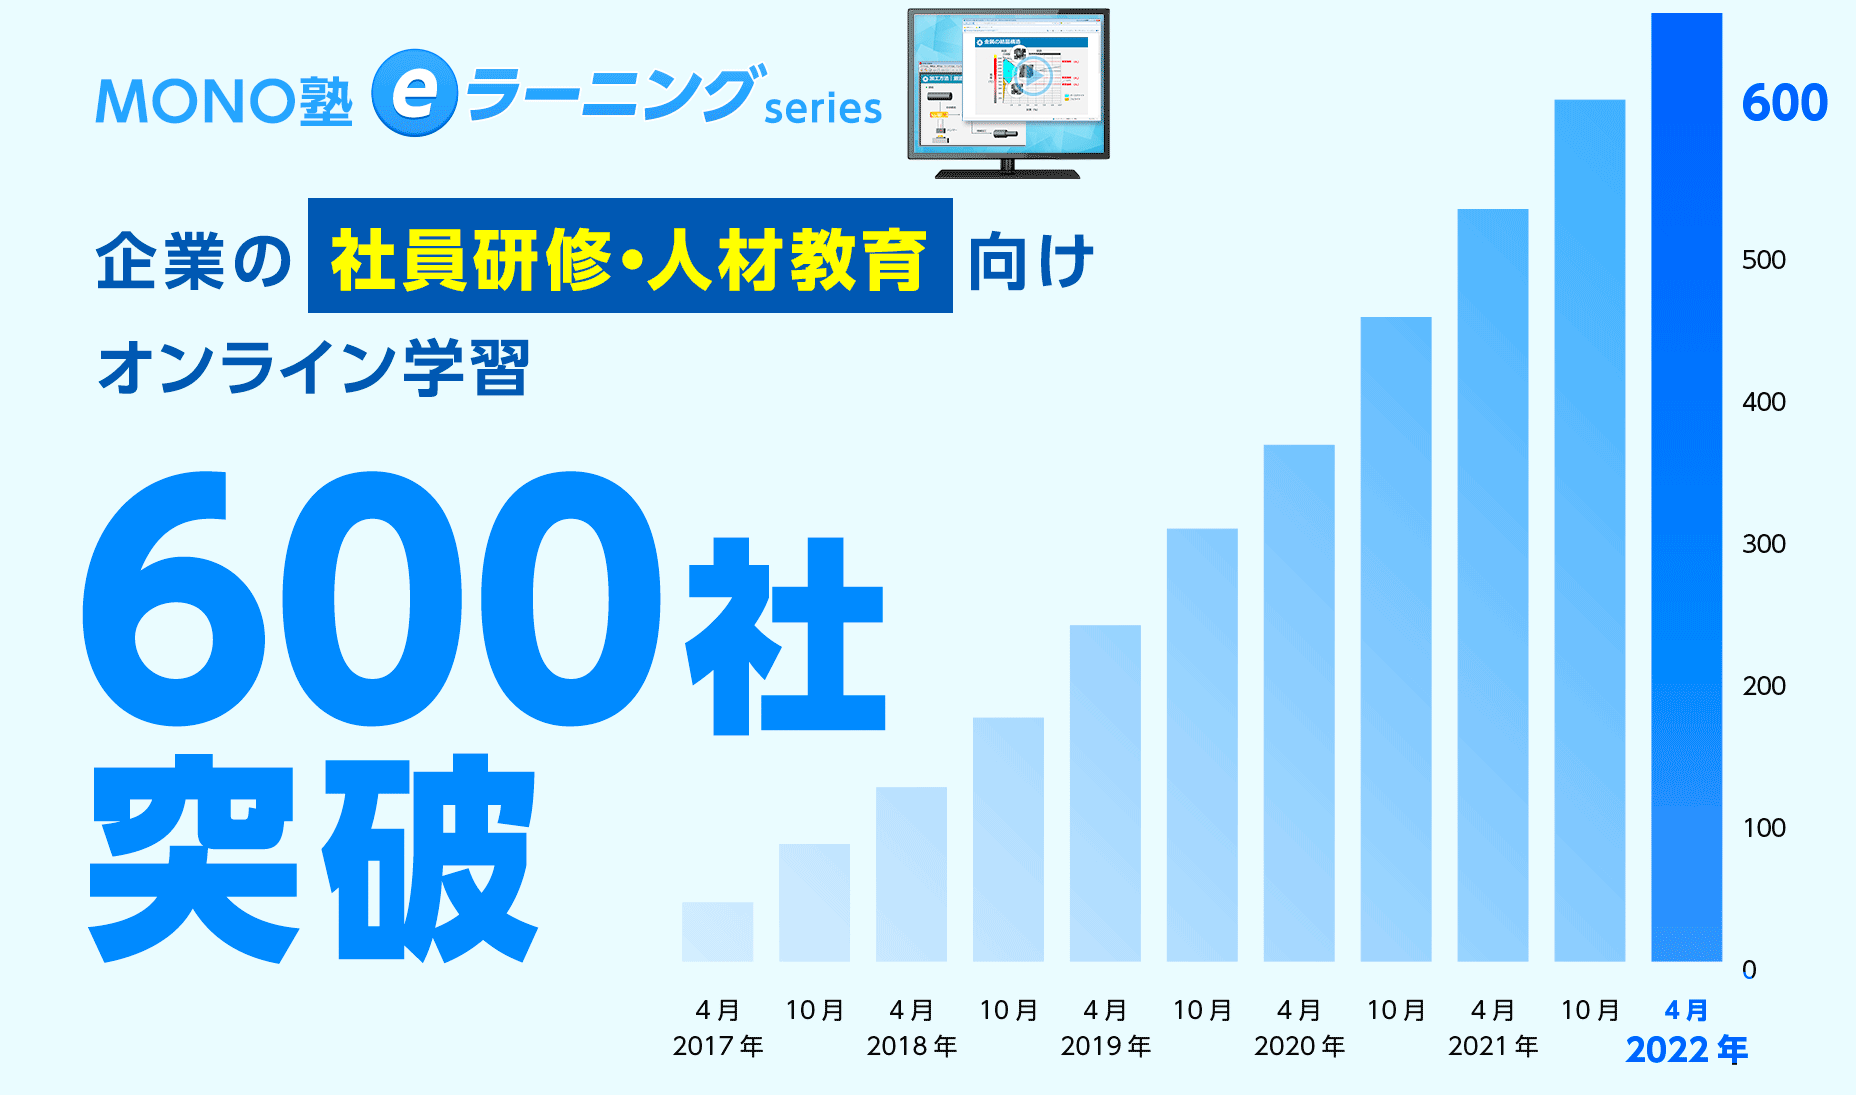 MONO塾Eラーニングseries 企業の社員研修・人材教育向けオンライン学習 600社突破